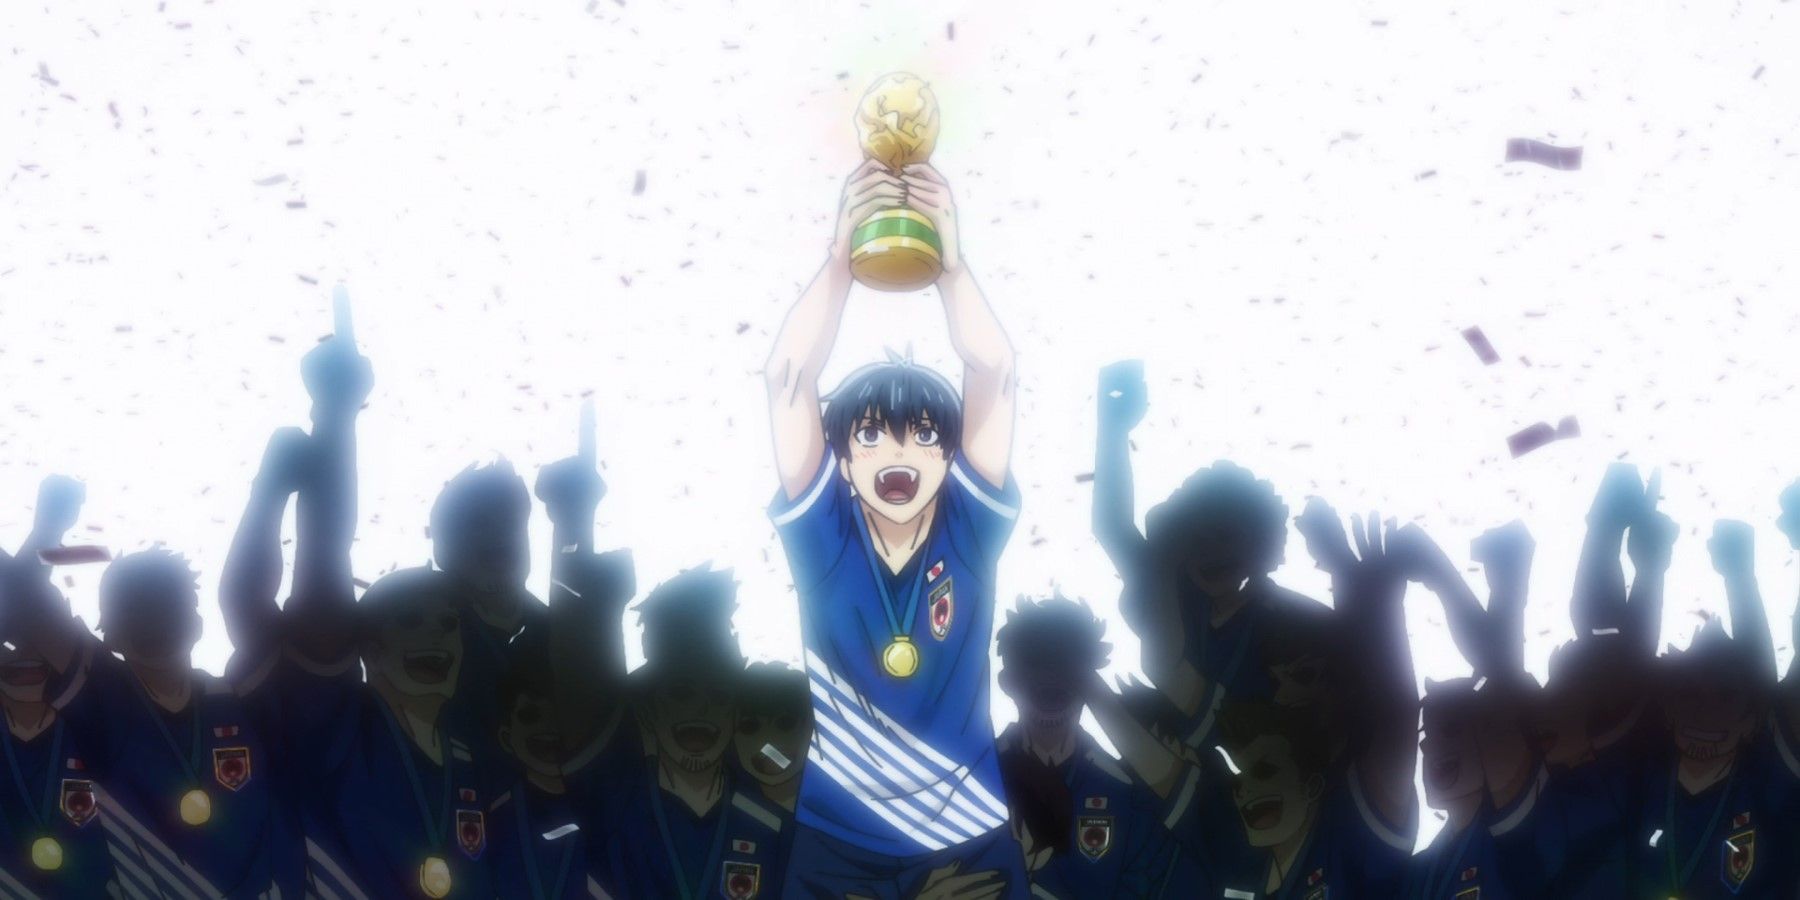 Isagi's dream of winning the world cup